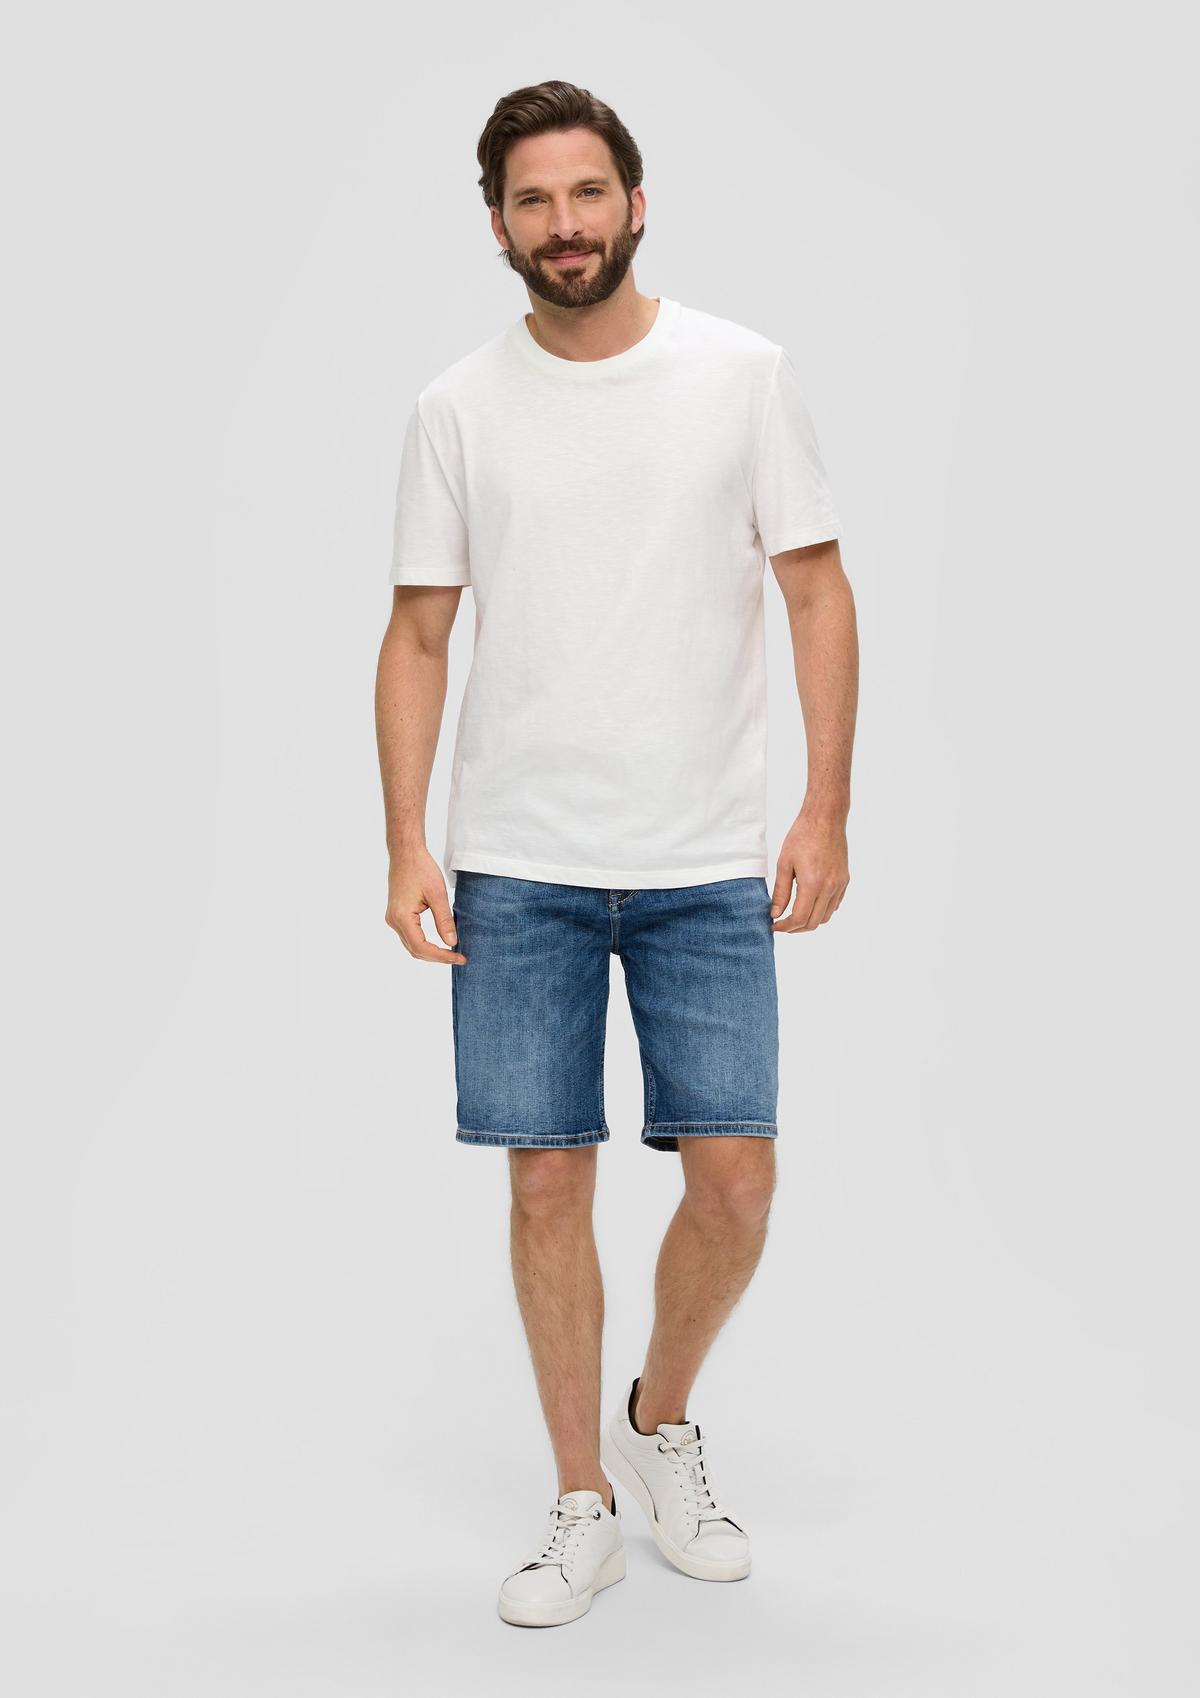 Denim shorts / regular fit / mid rise / straight leg